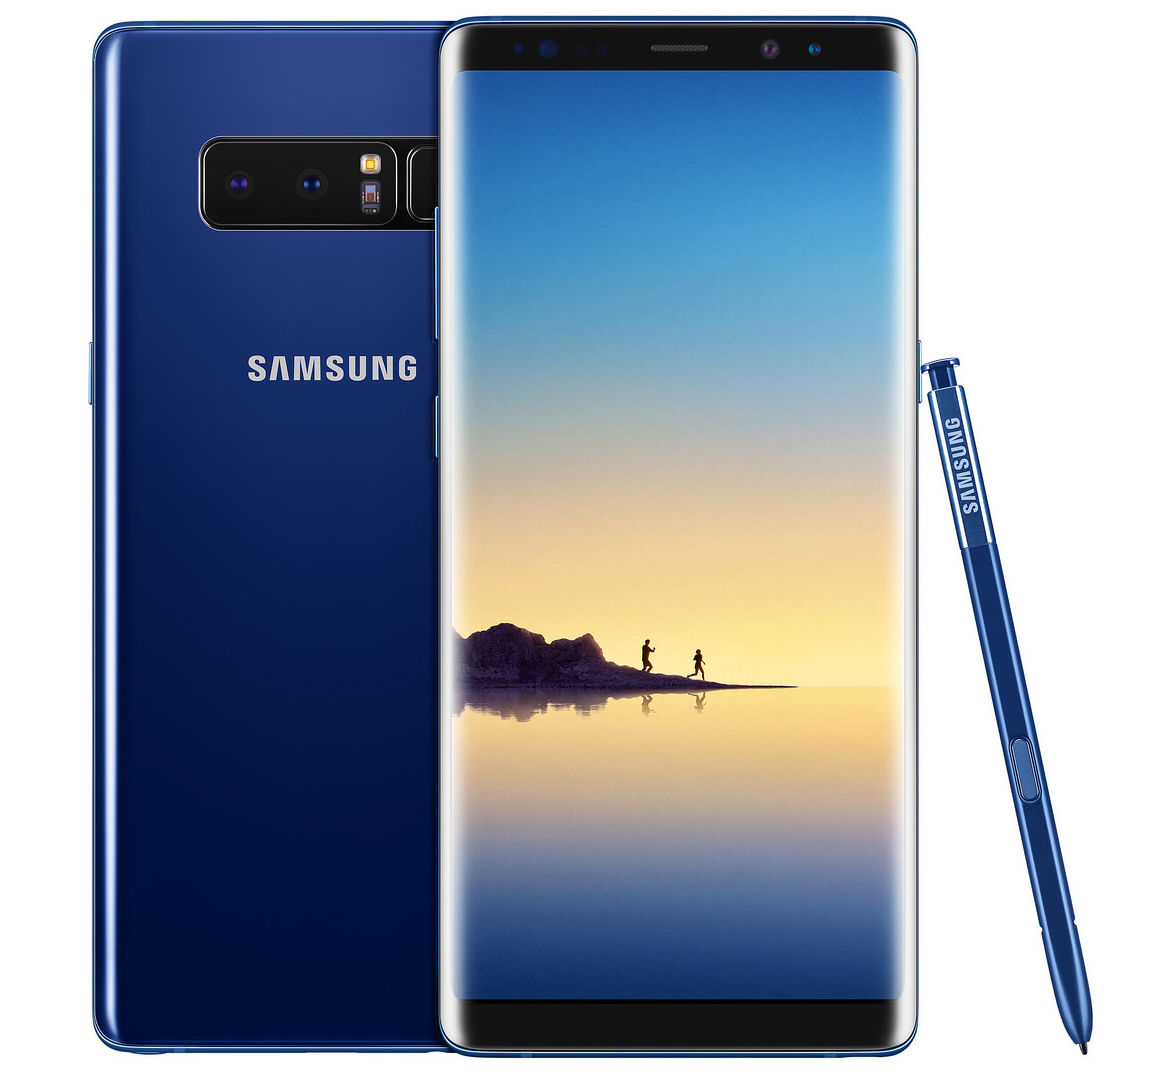 Samsung Galaxy Price List 2018